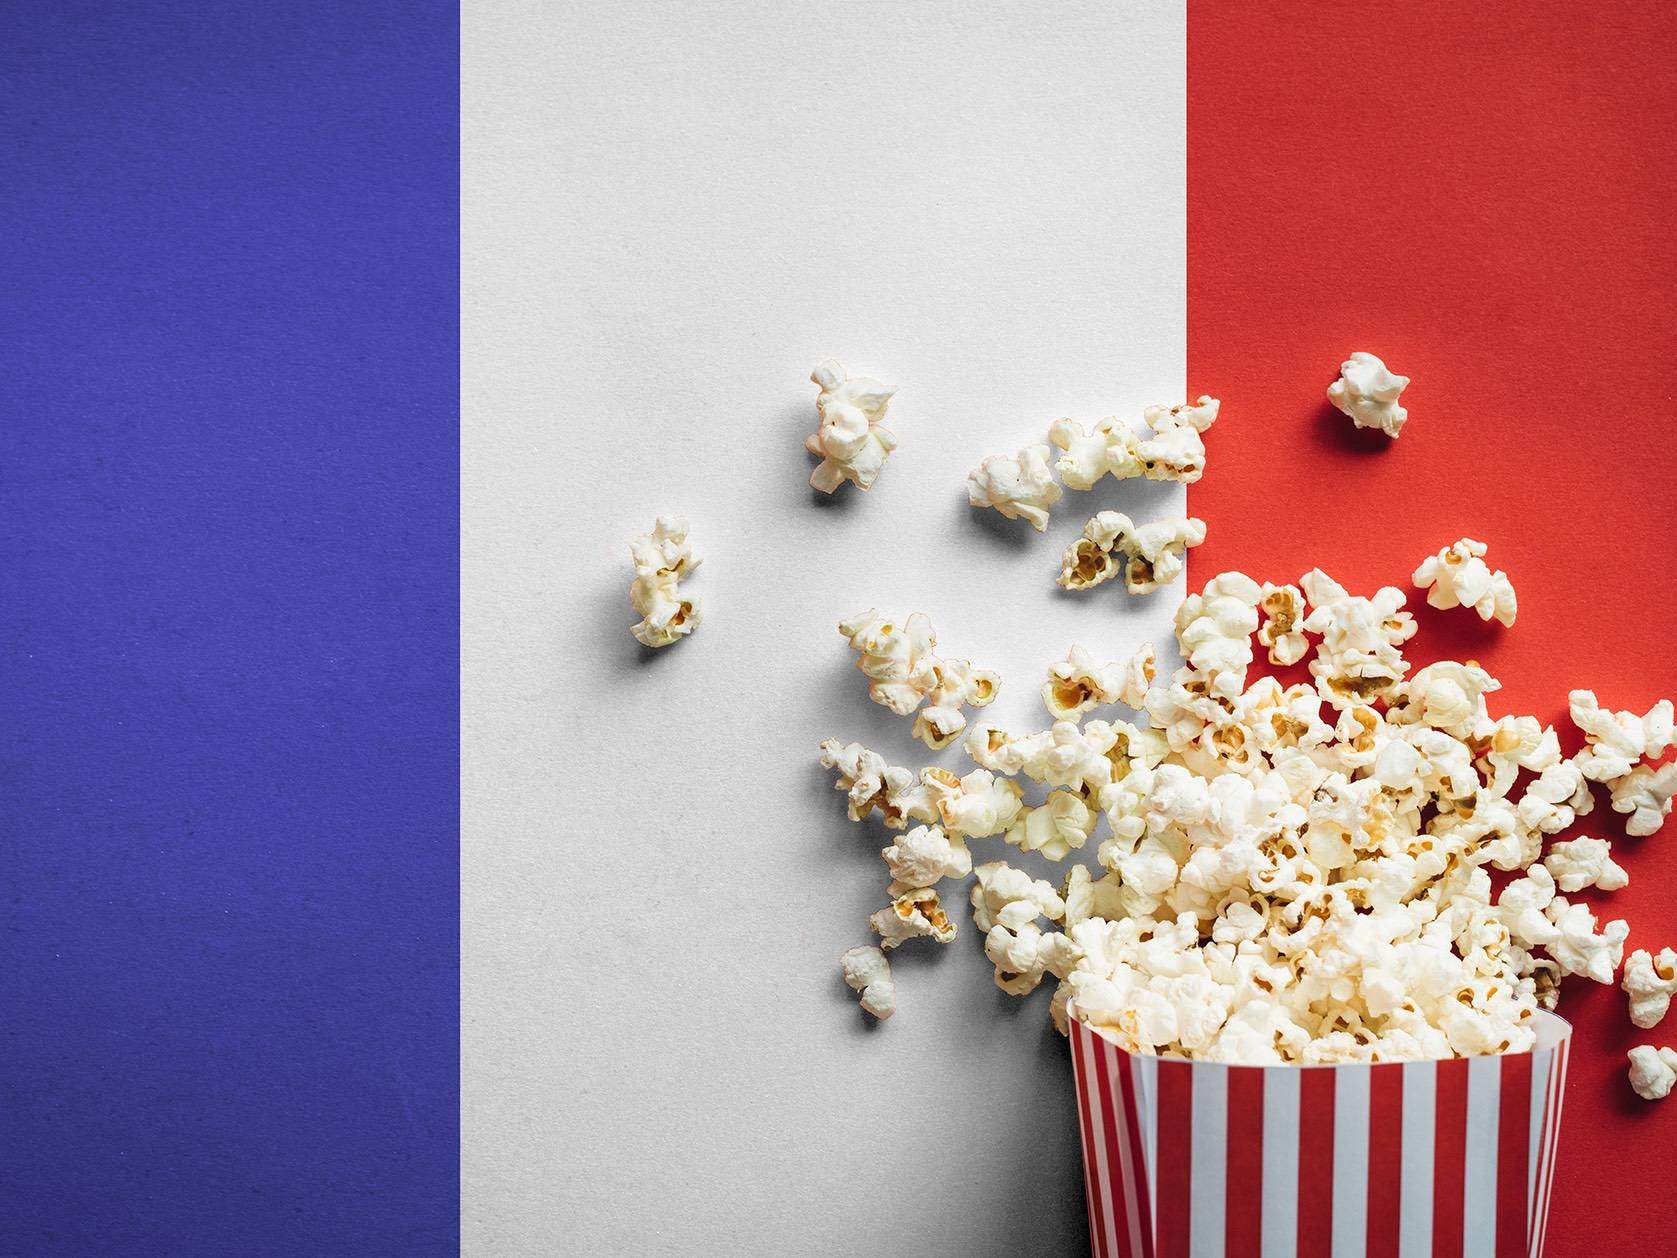 spilled popcorn on french flag